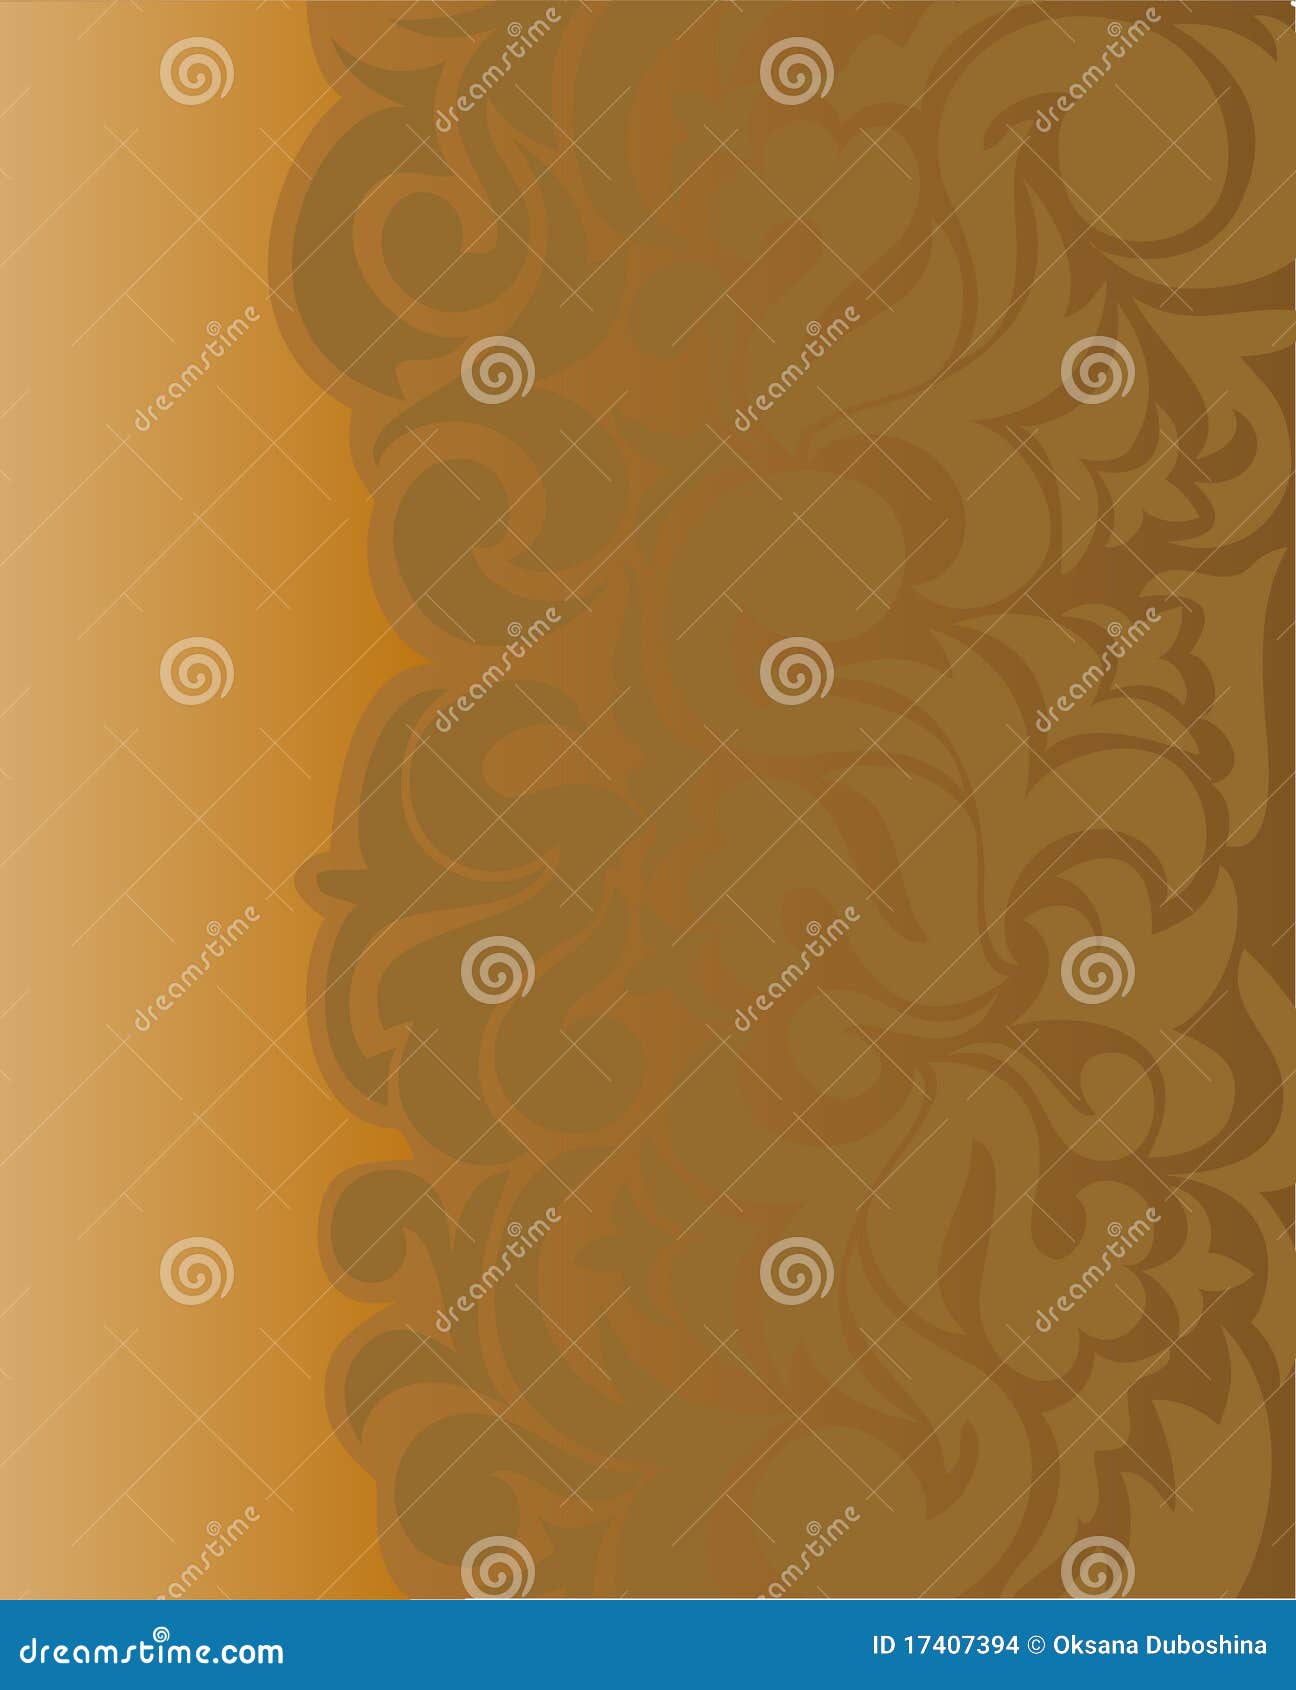 brown asymmetrical background